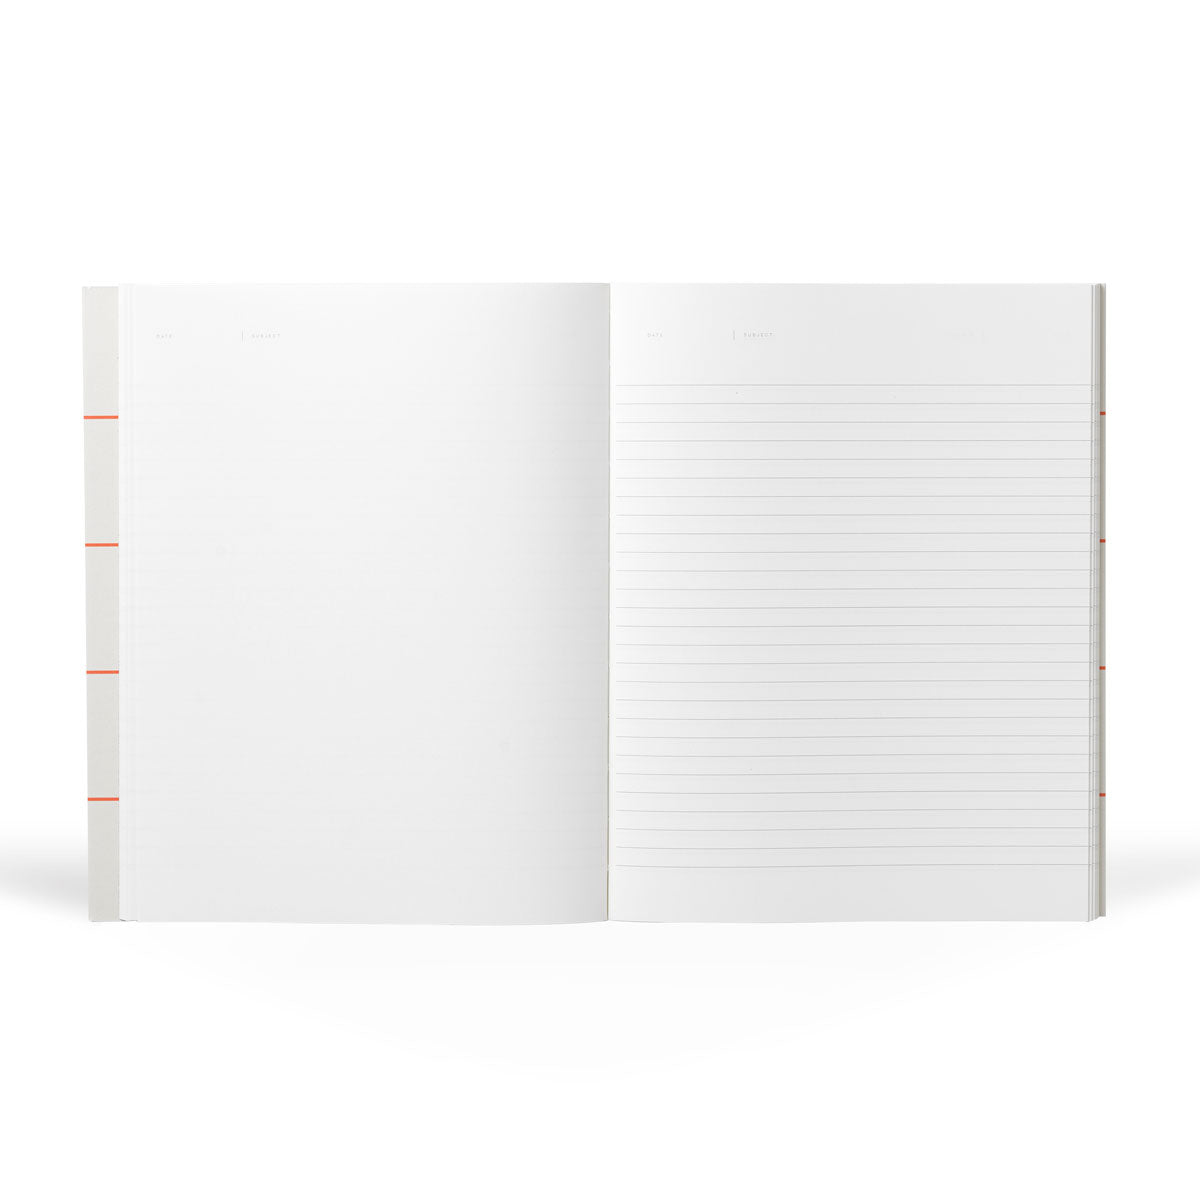 NOTEM UMA Flat Notebook, Large - Light Gray